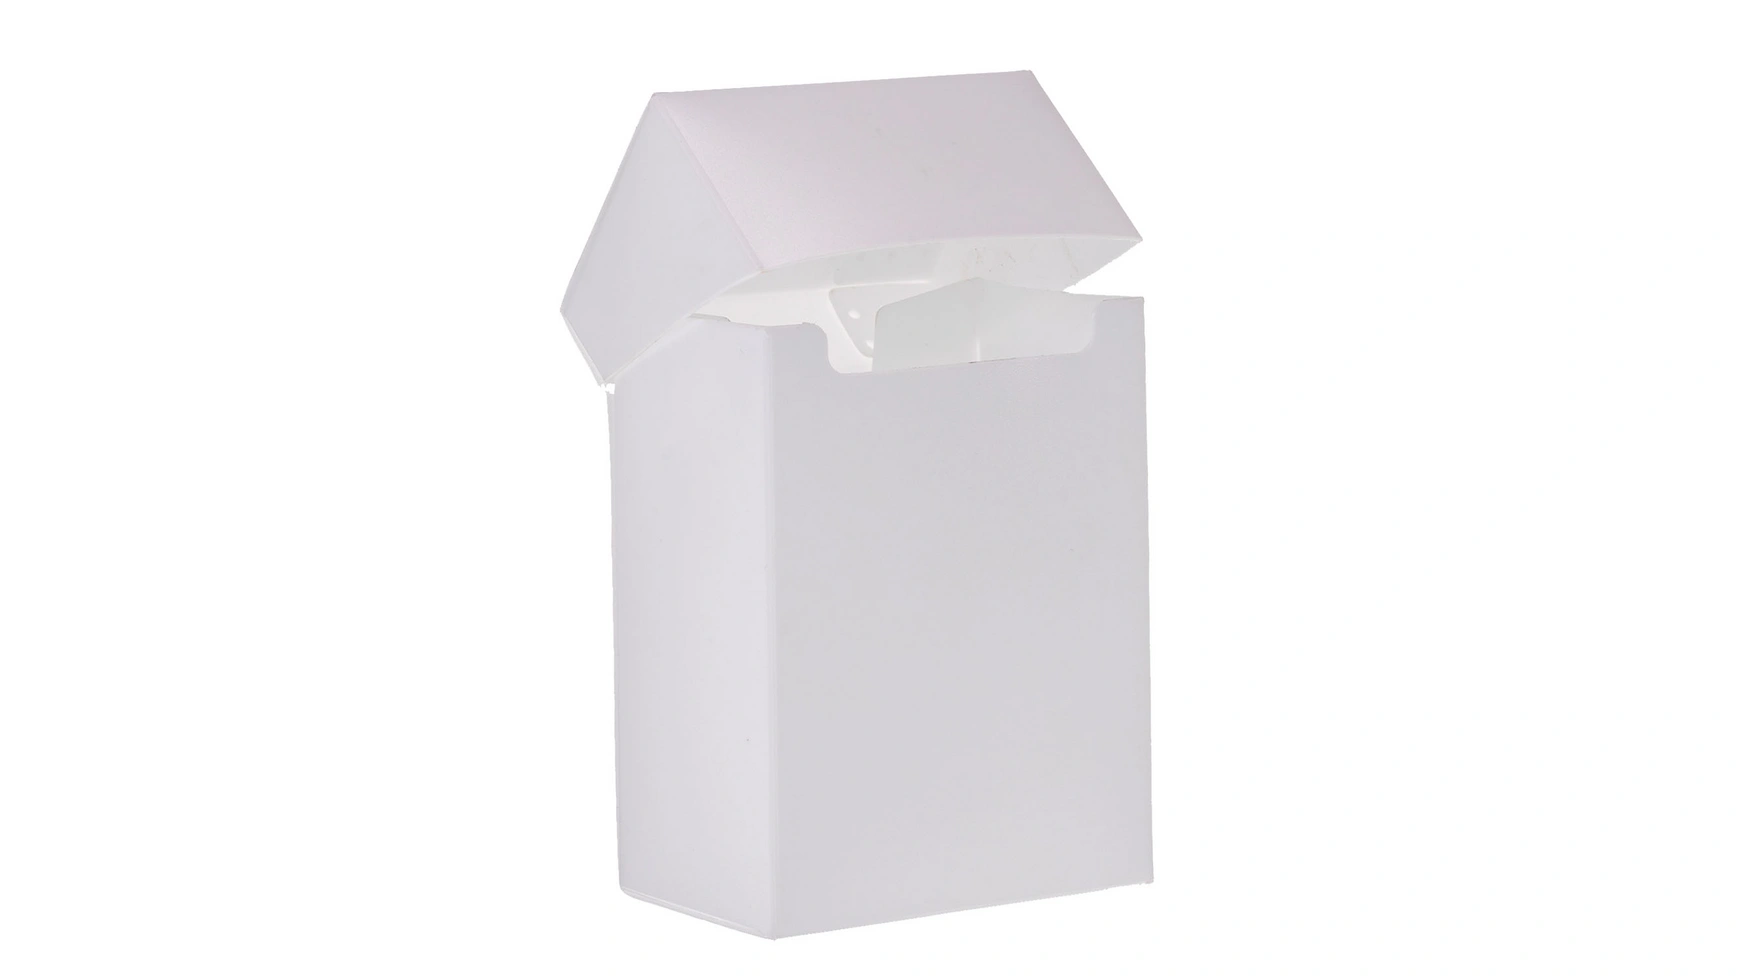 Müller Toy Place Картонная коробка белый Mueller кубок малый лучший папа 13 х 7 5 х 7 5 см